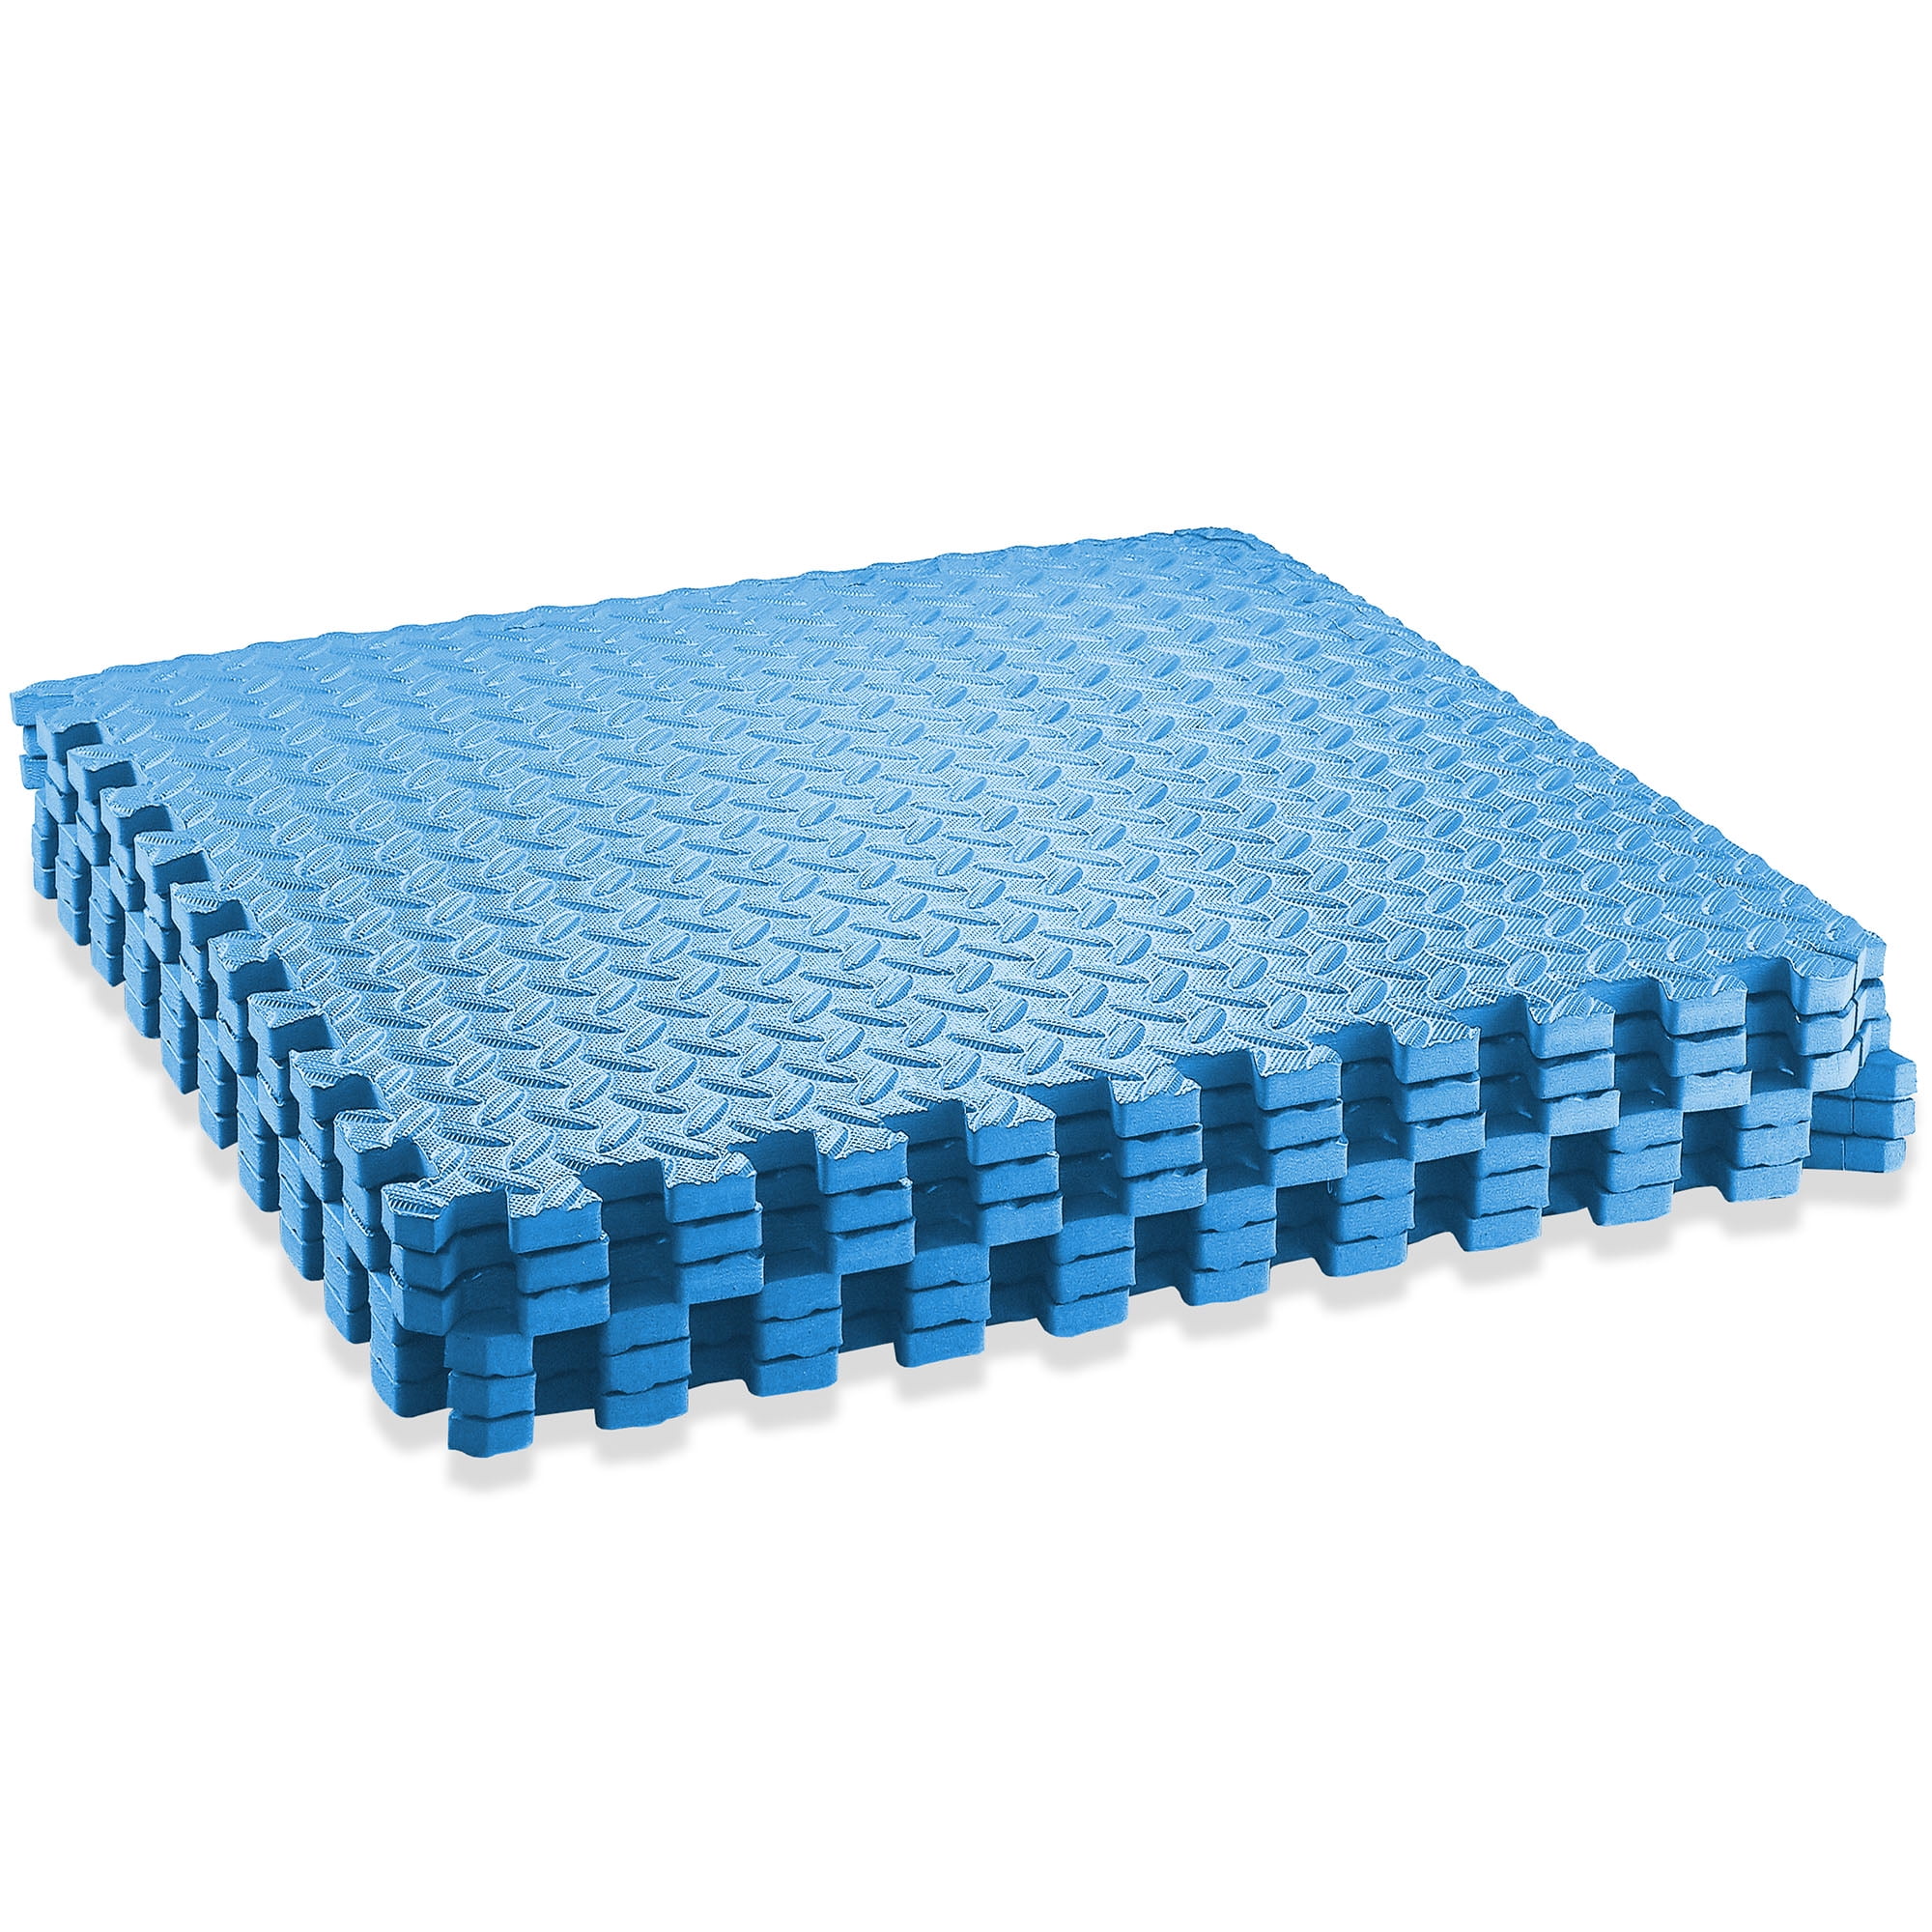 Amstaff Interlocking Foam Floor Tiles - Heavy Duty Water Proof EVA Foam  Mats, Puzzle Flooring Mats for for Gym, Play Area, Equipment, Noise  Reduction - 24x24 inch (Light Wood, 6 Tiles, 24